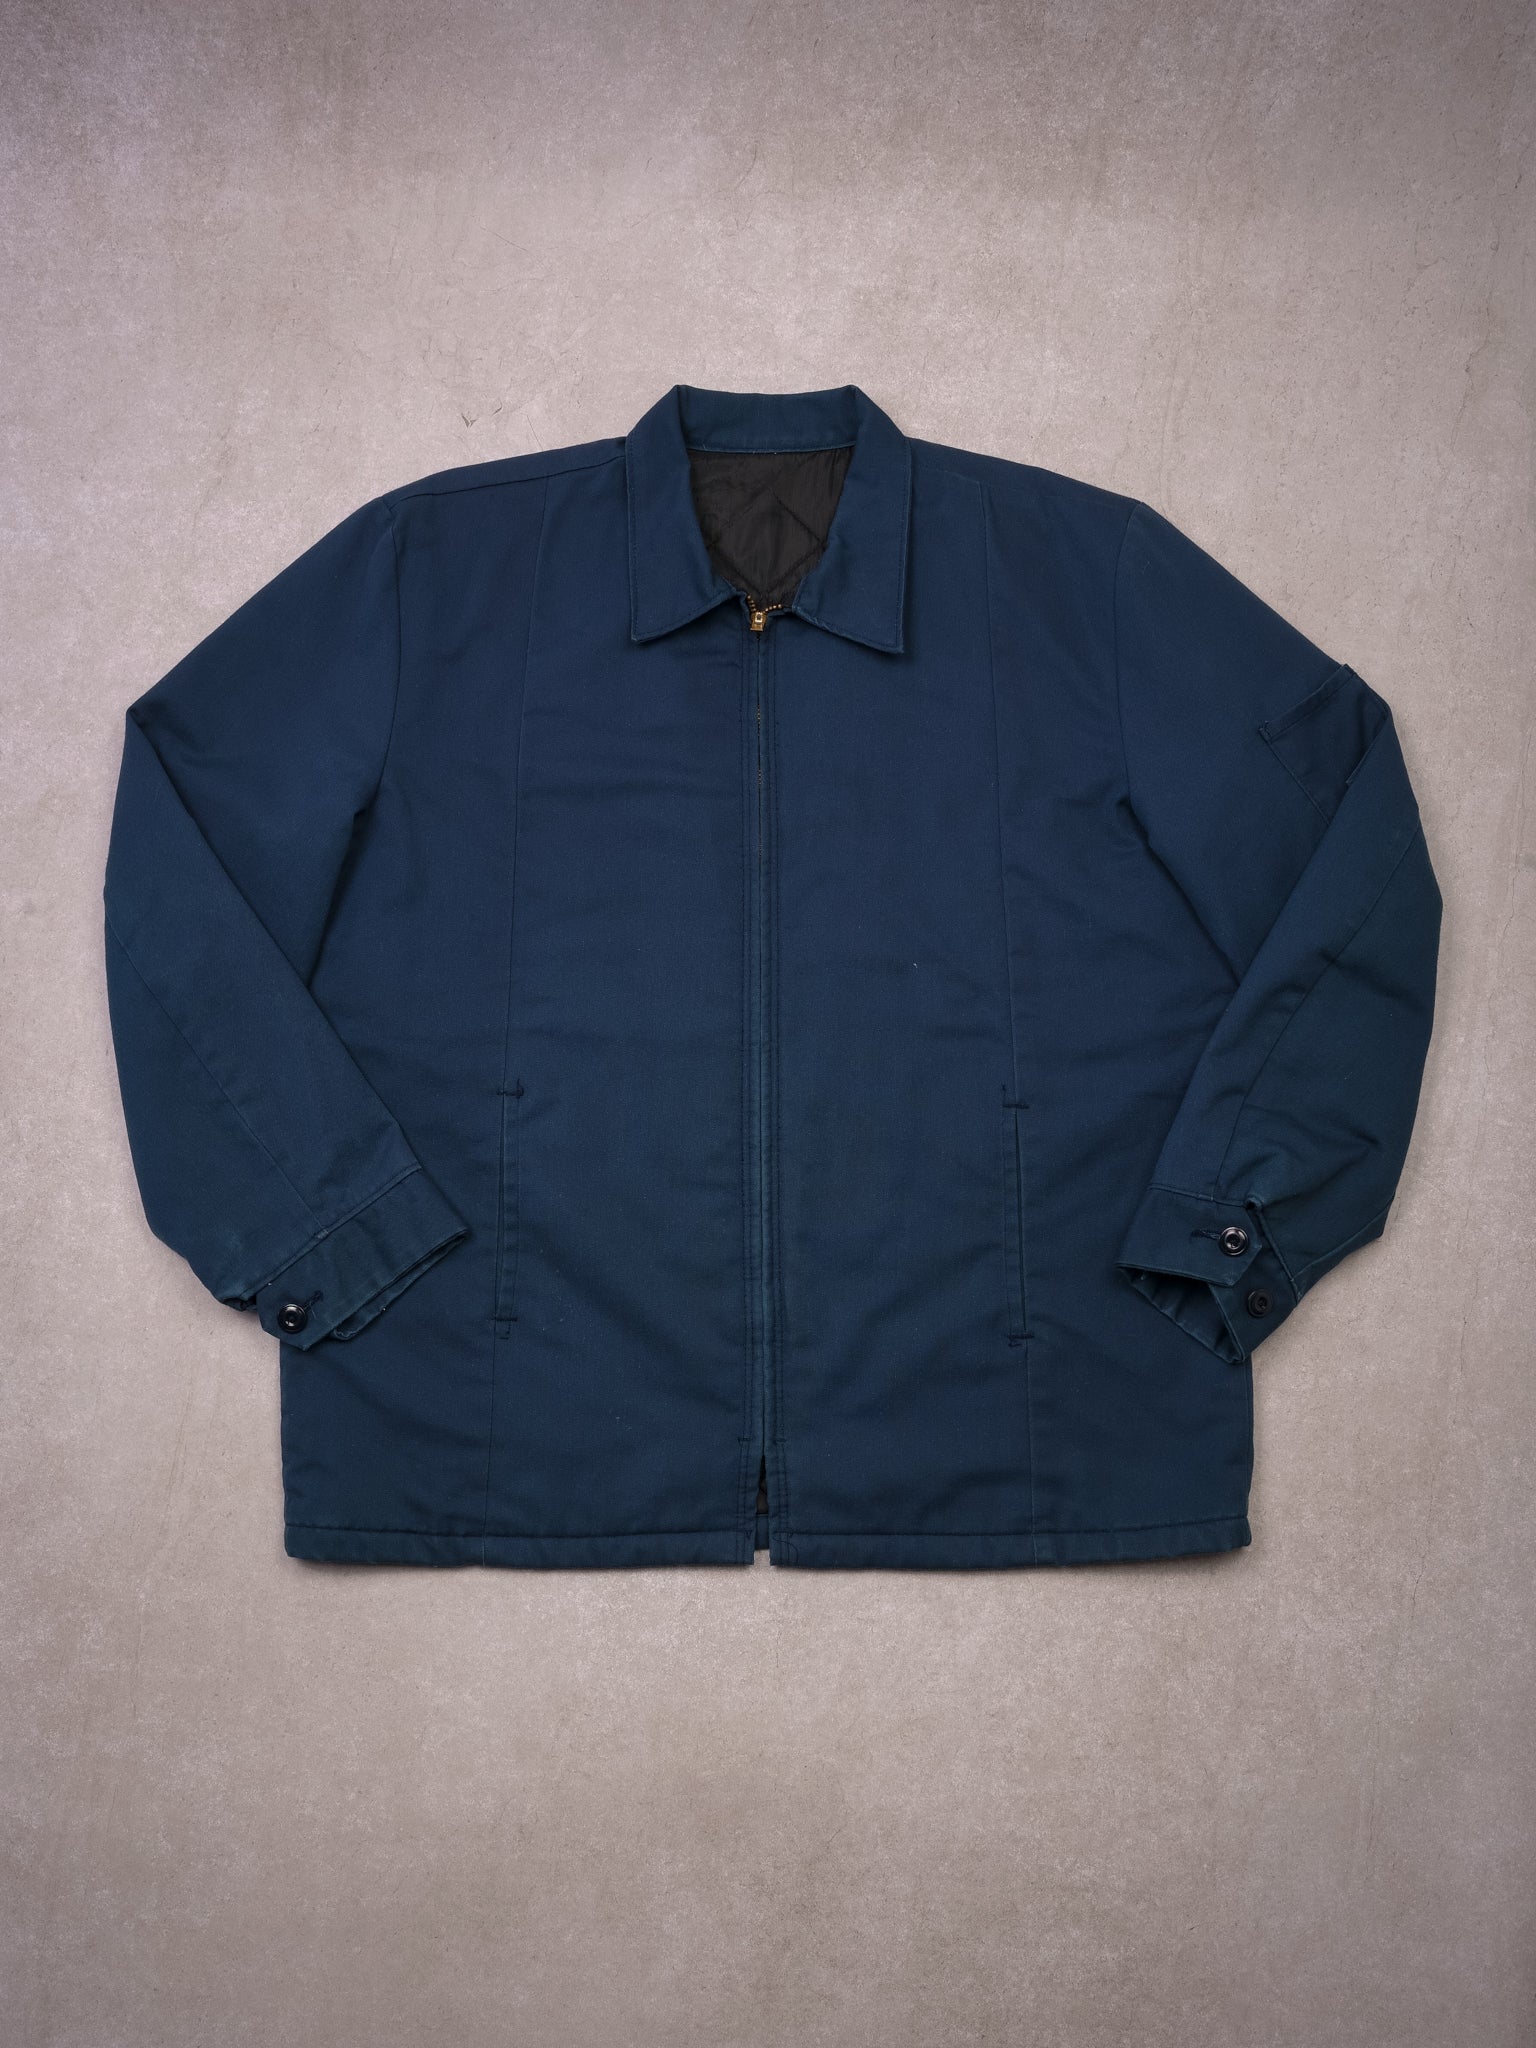 Vintage 70s Blank Navy Blue Workwear Jacket (L)